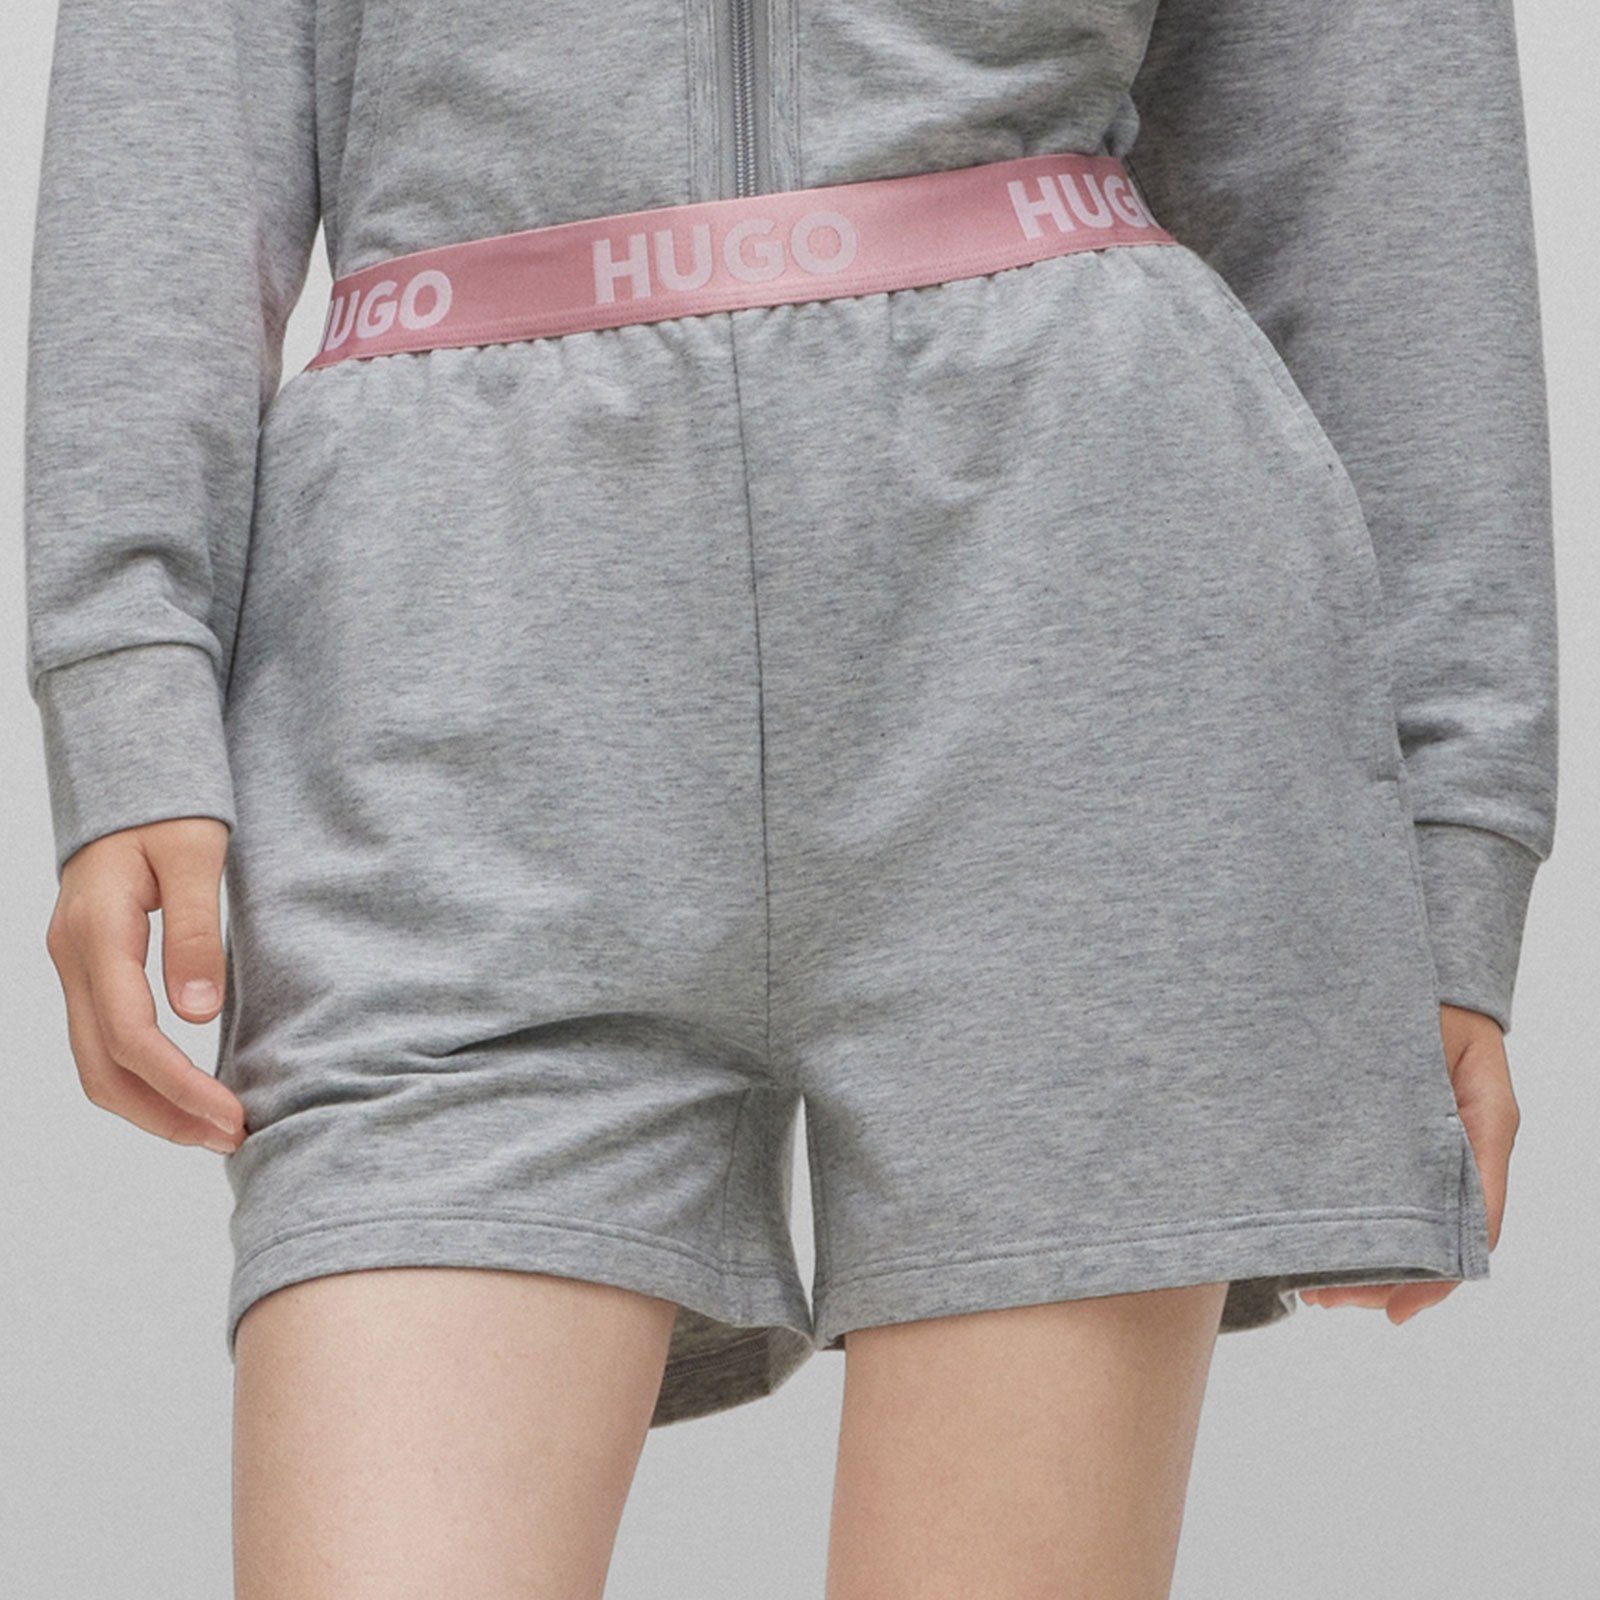 Sporty HUGO Shorts 035 grey mit Shorts Bund Marken-Logos mit Logo sichtbarem